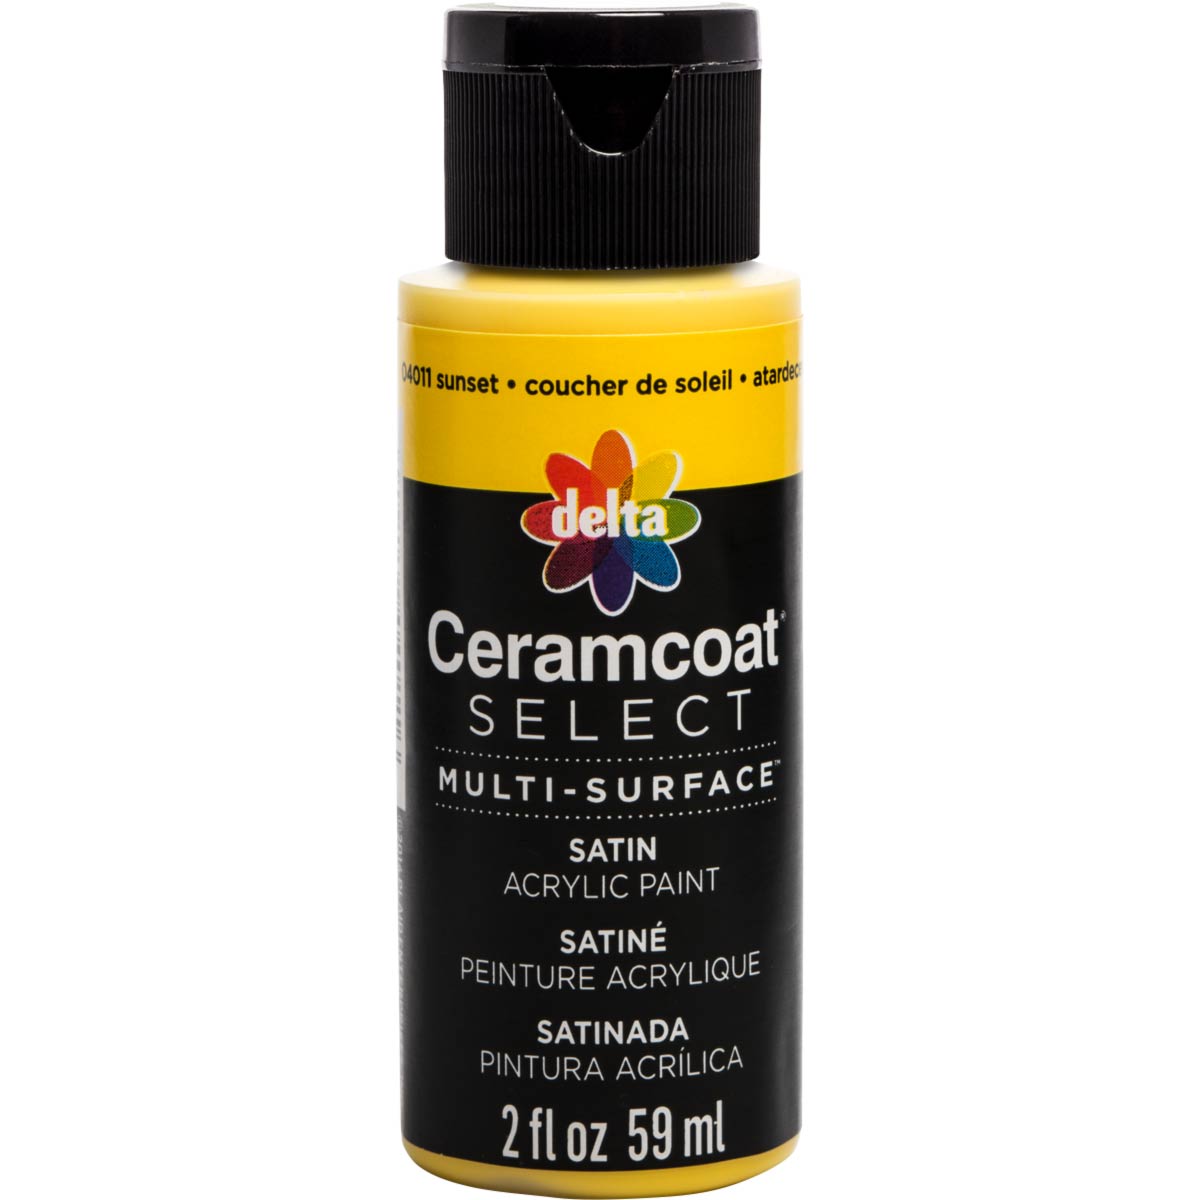 Delta Ceramcoat ® Select Multi-Surface Acrylic Paint - Satin - Sunset, 2 oz. - 04011